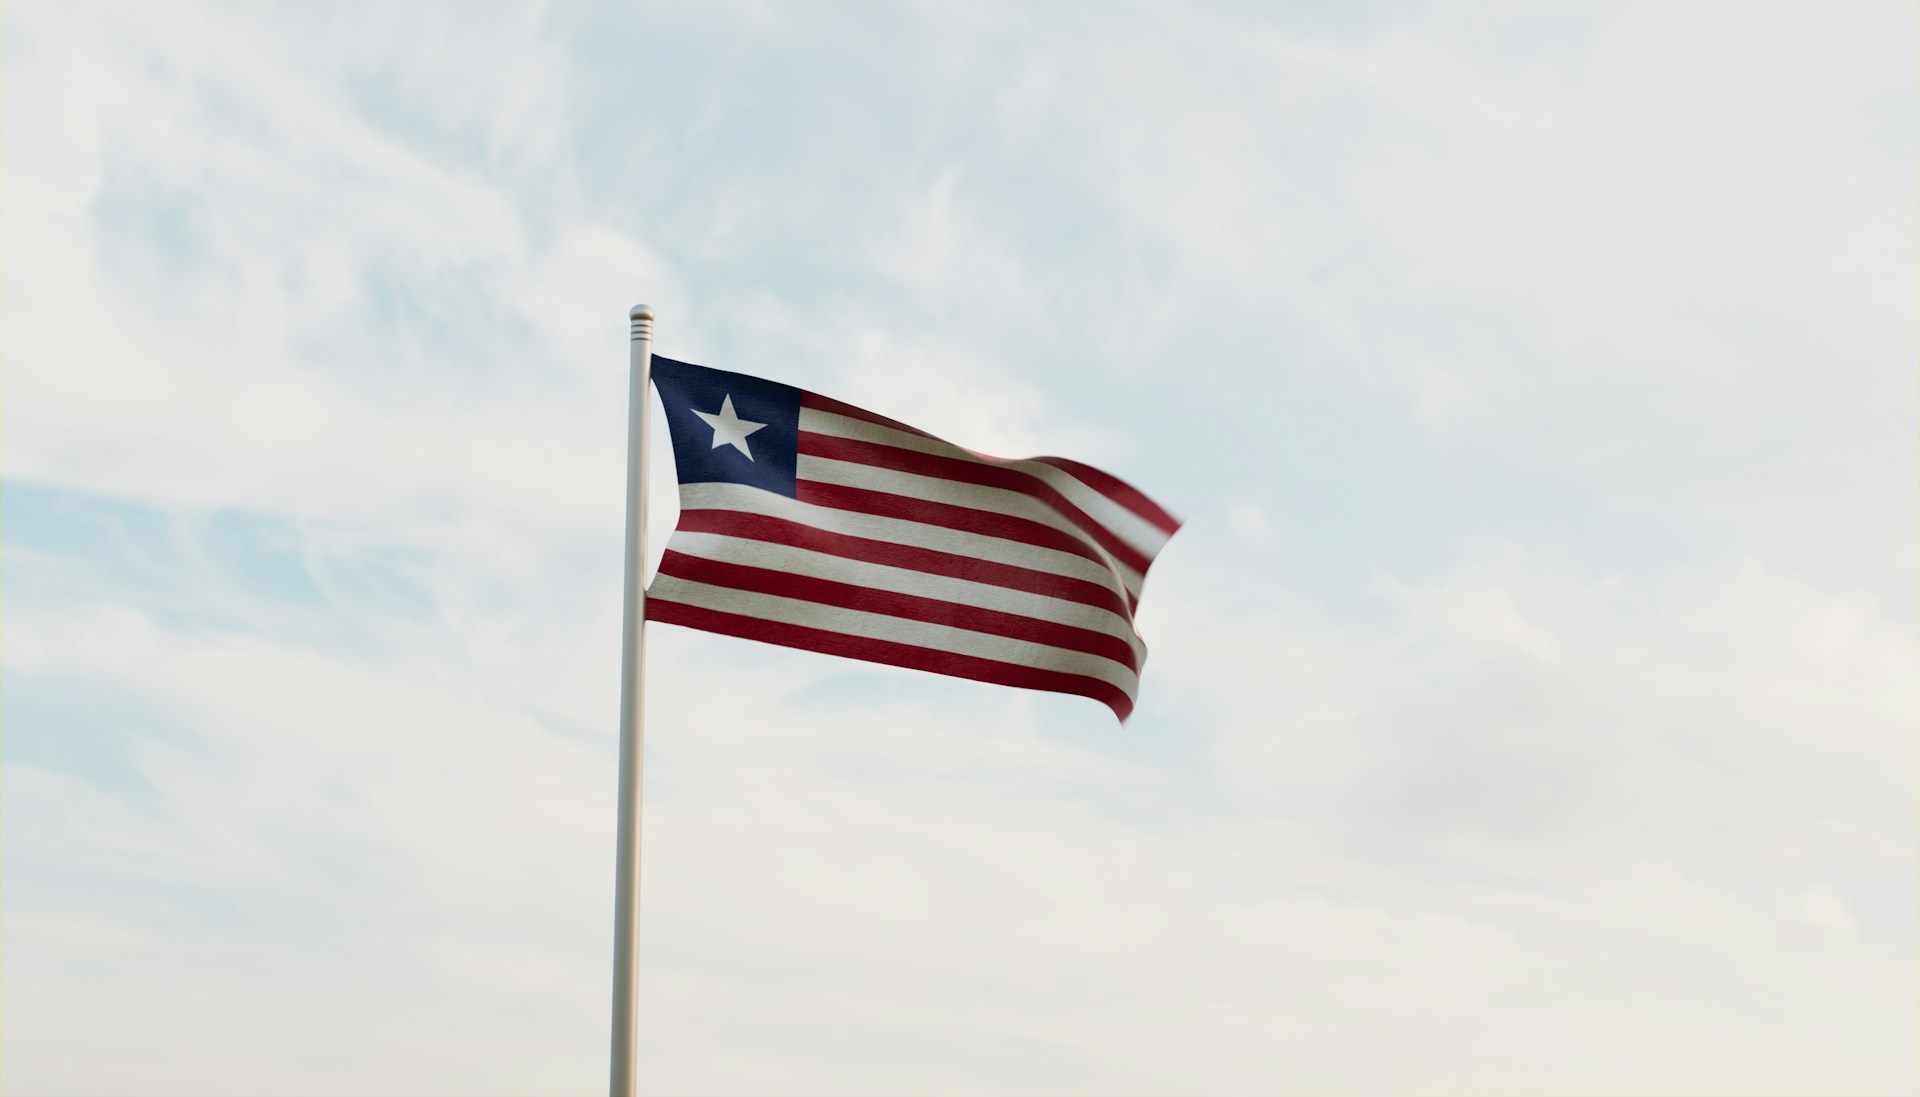 The Liberian flag